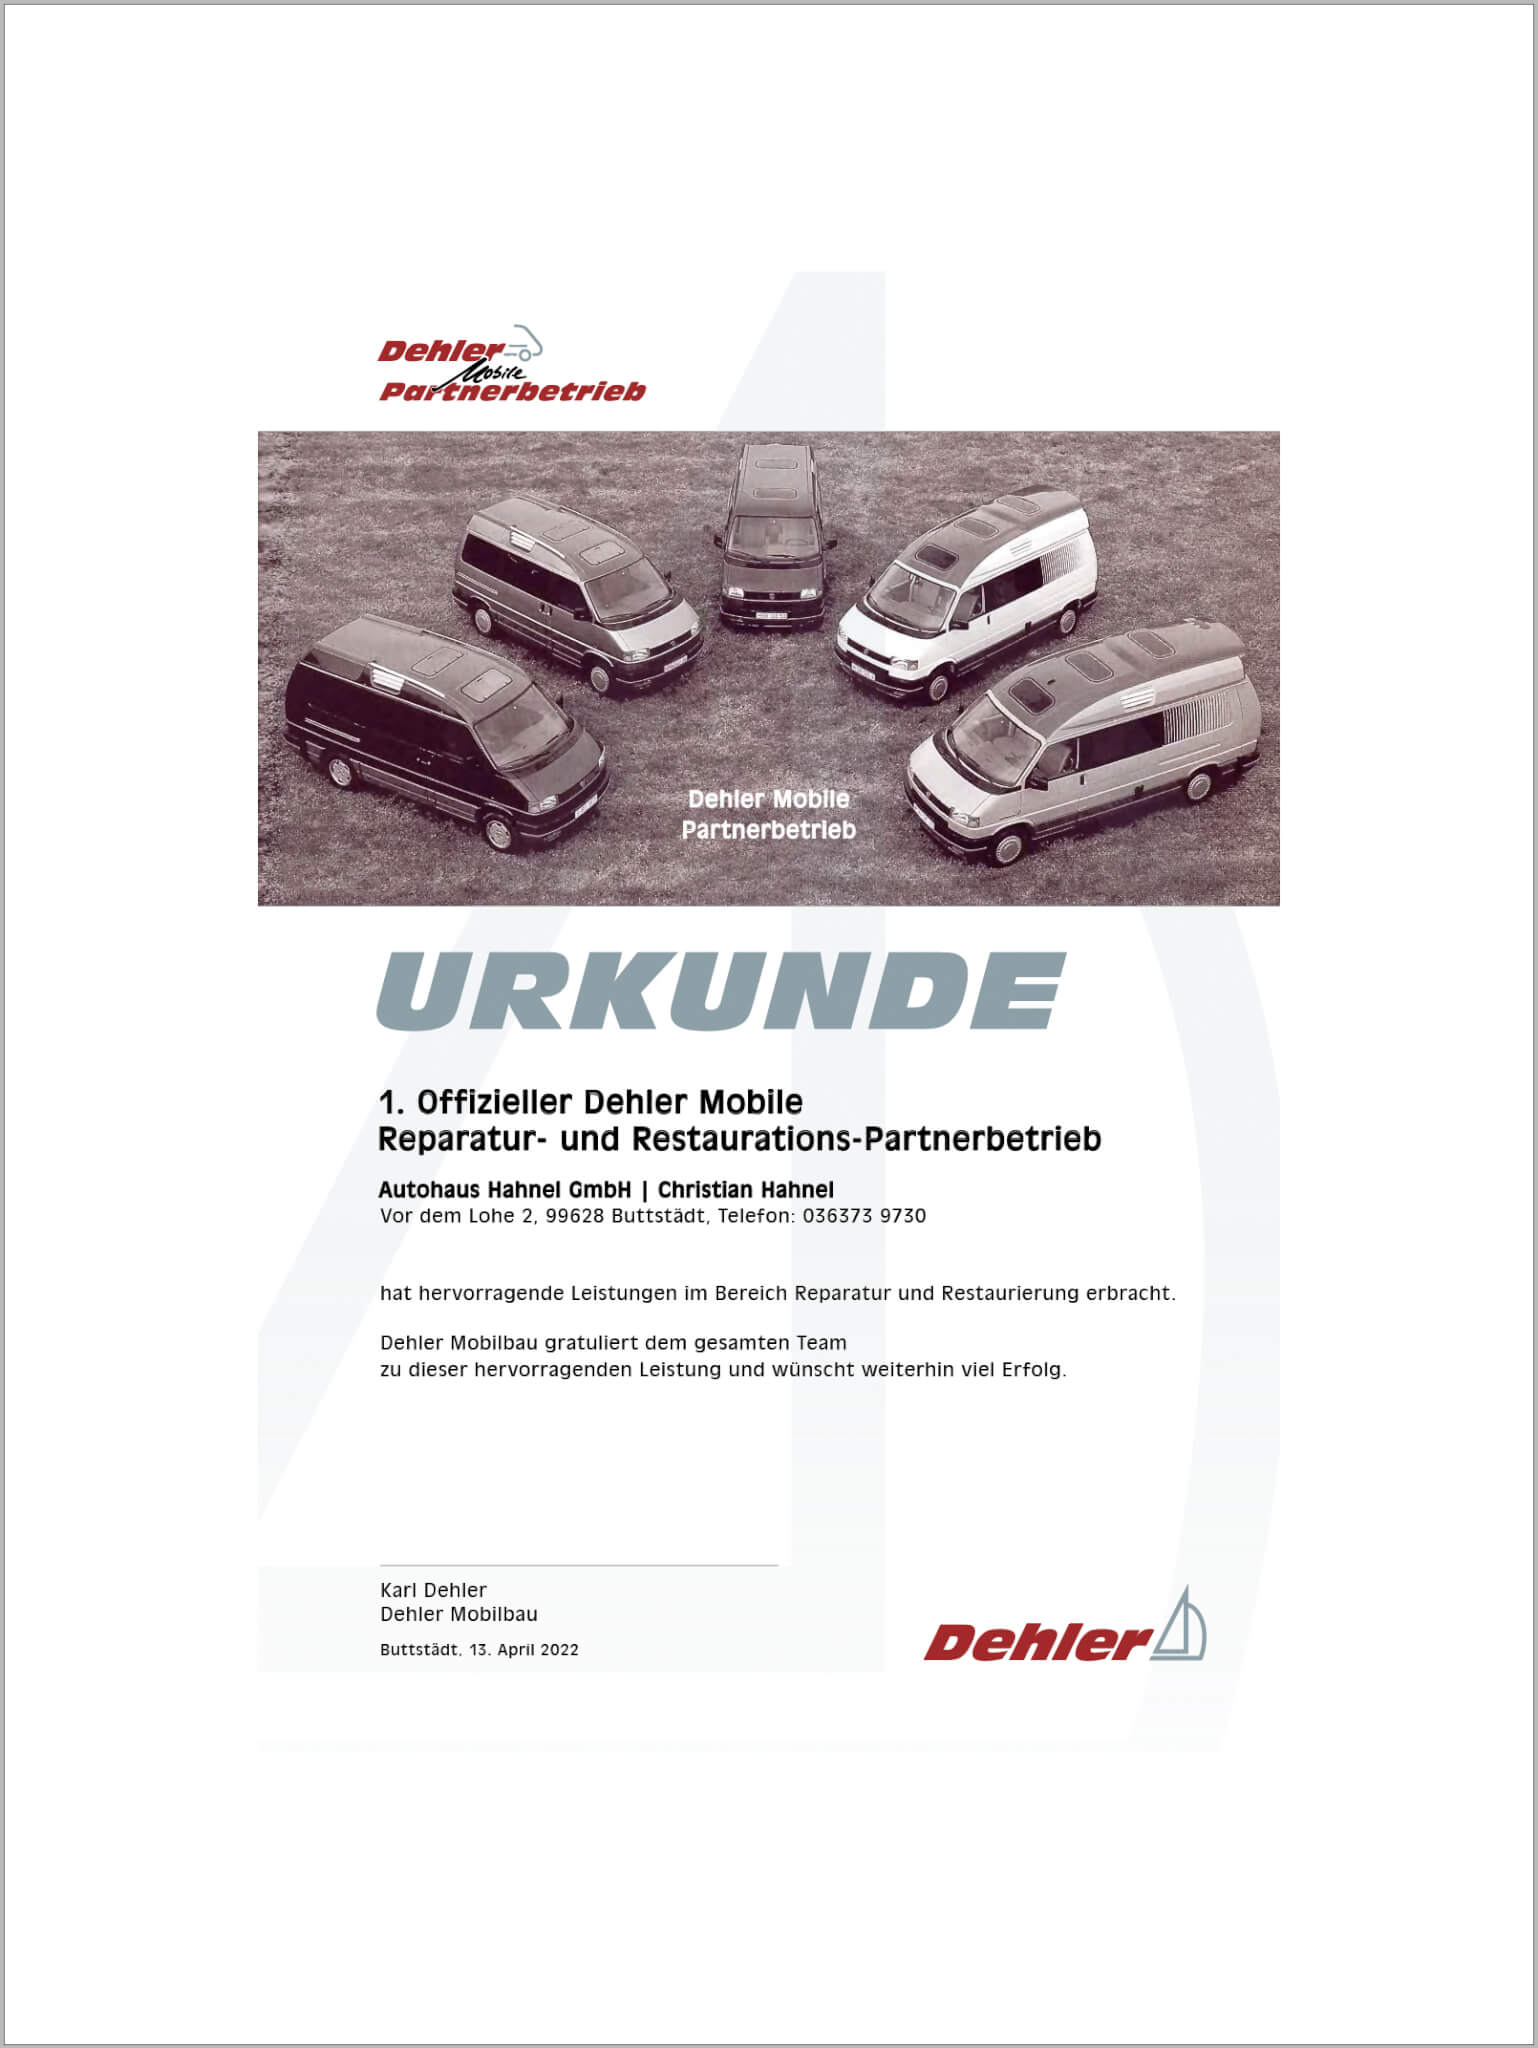 Dehlerfreunde - Hahnel Automobile | Offizieller Dehler Mobile Partnerbetrieb